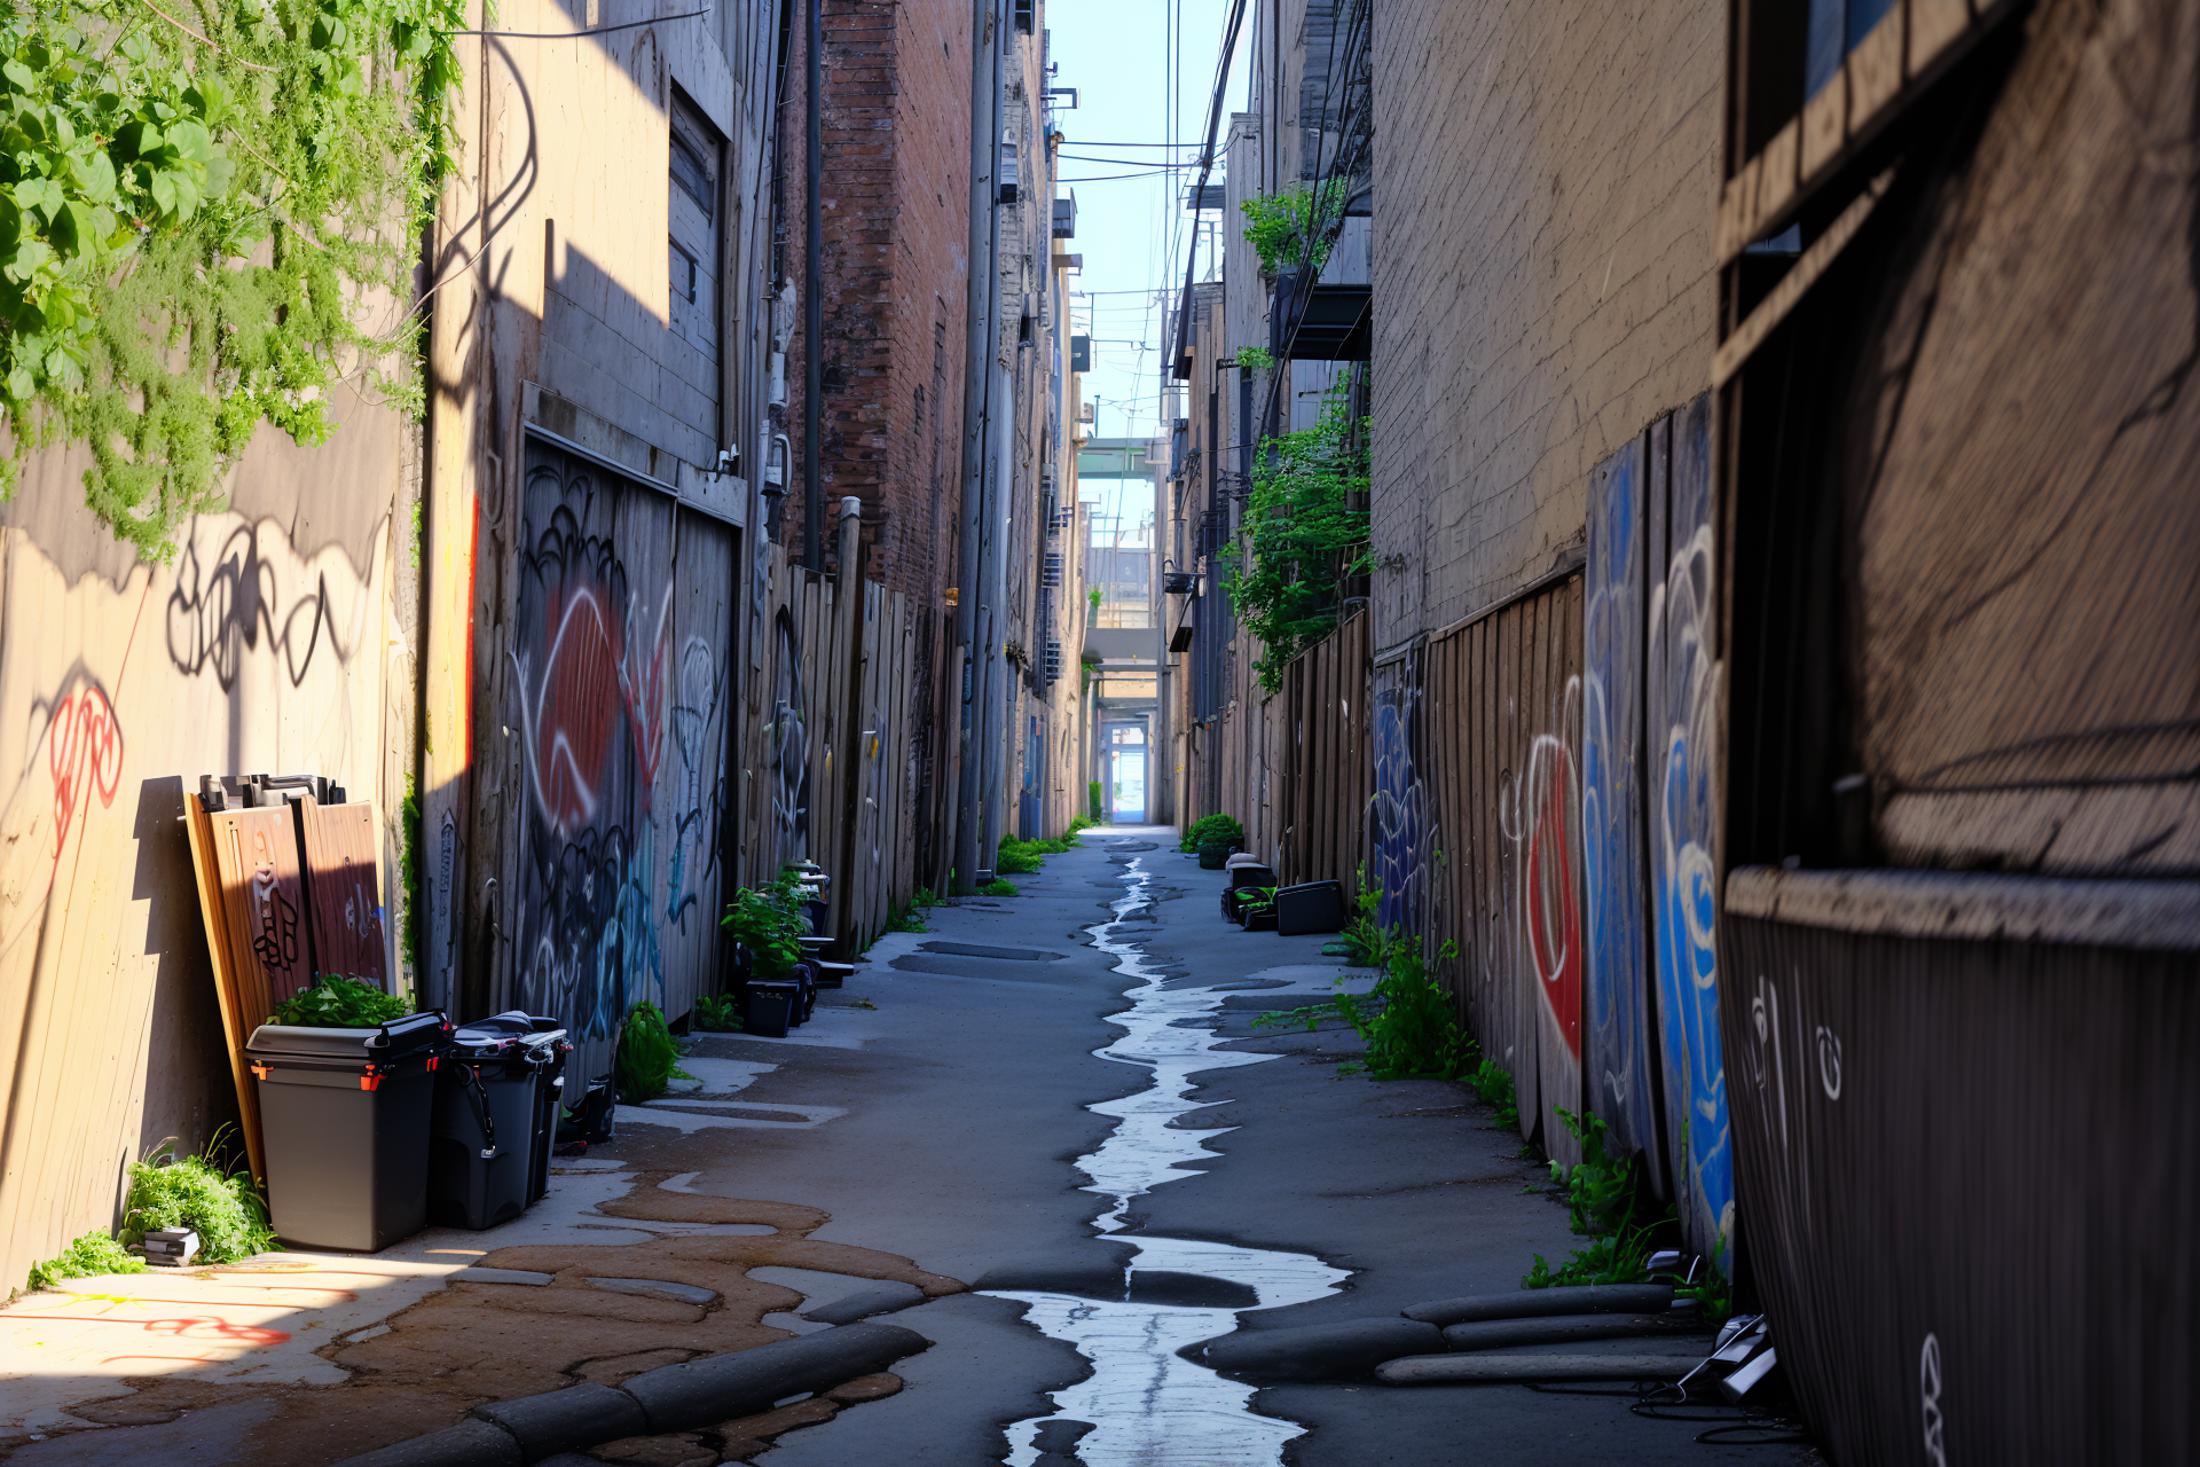 Montreal Alleys // Ruelles de Montréal image by AugmentedRealityCat